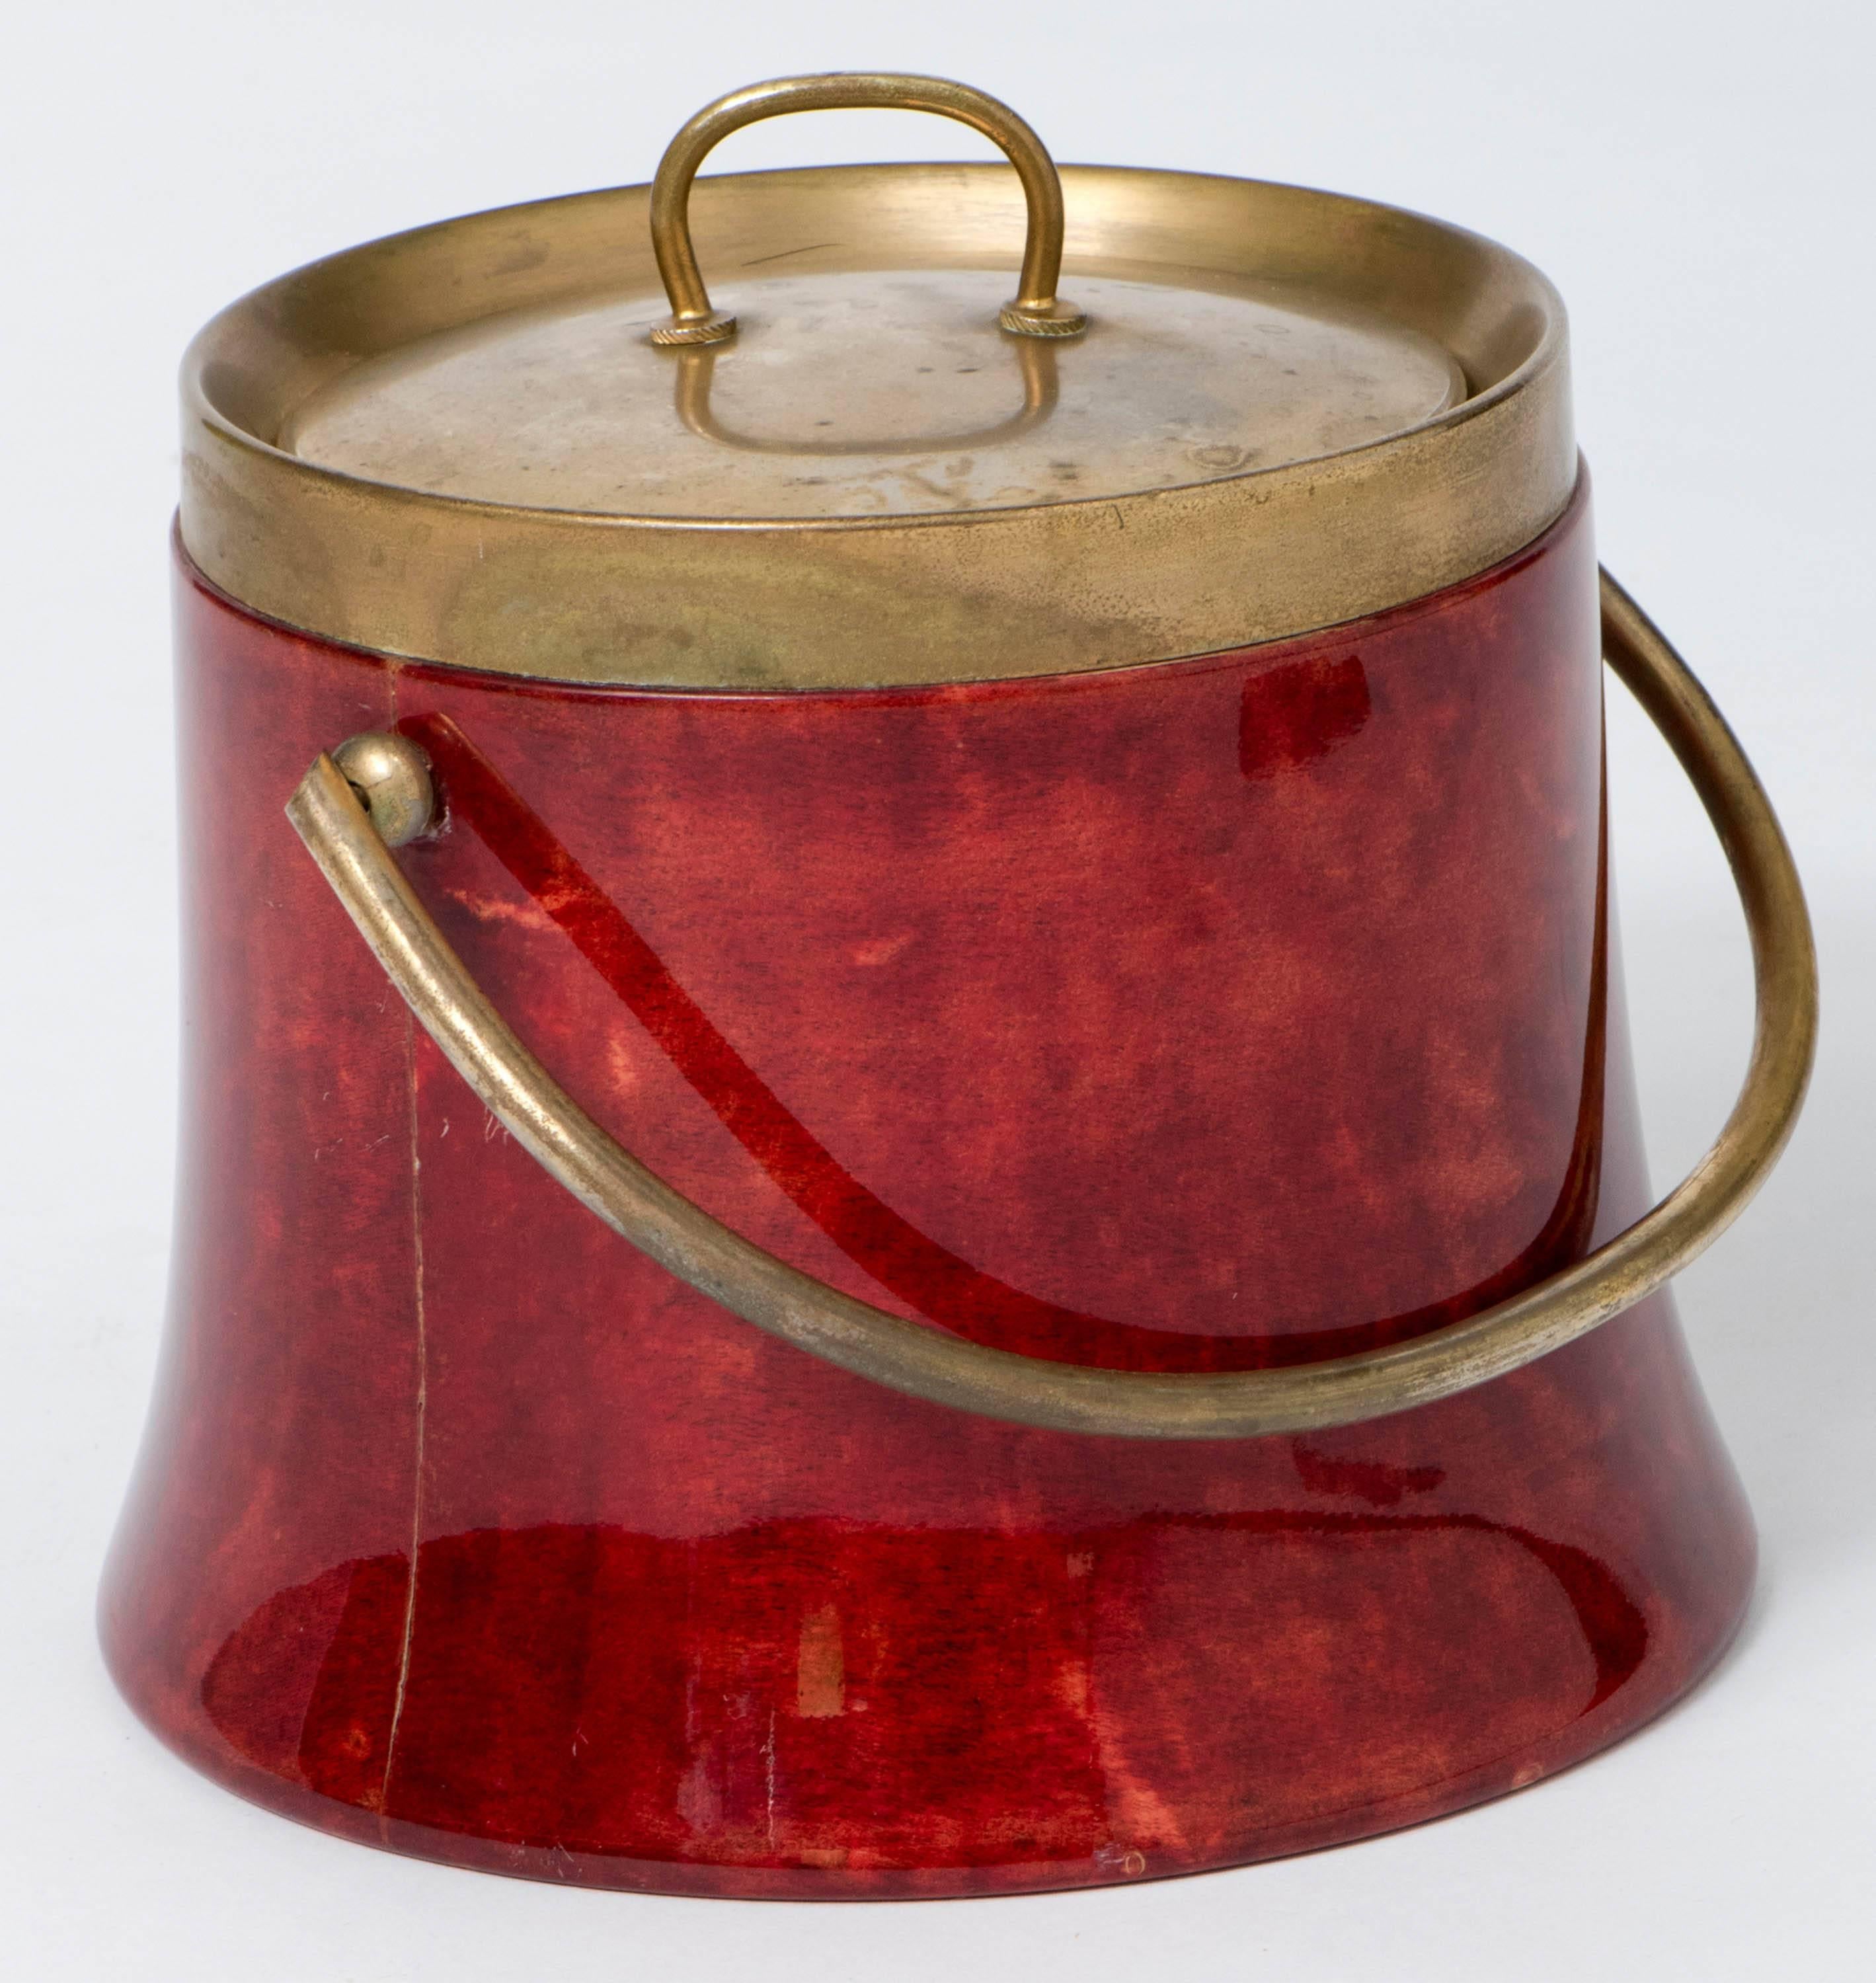 An Aldo Tura ice bucket
Reddish lacquered bucket.
Brass handle, mounts and lid,
Italy,
circa 1950
Measures: 21 cm high x 19 cm diameter.
 